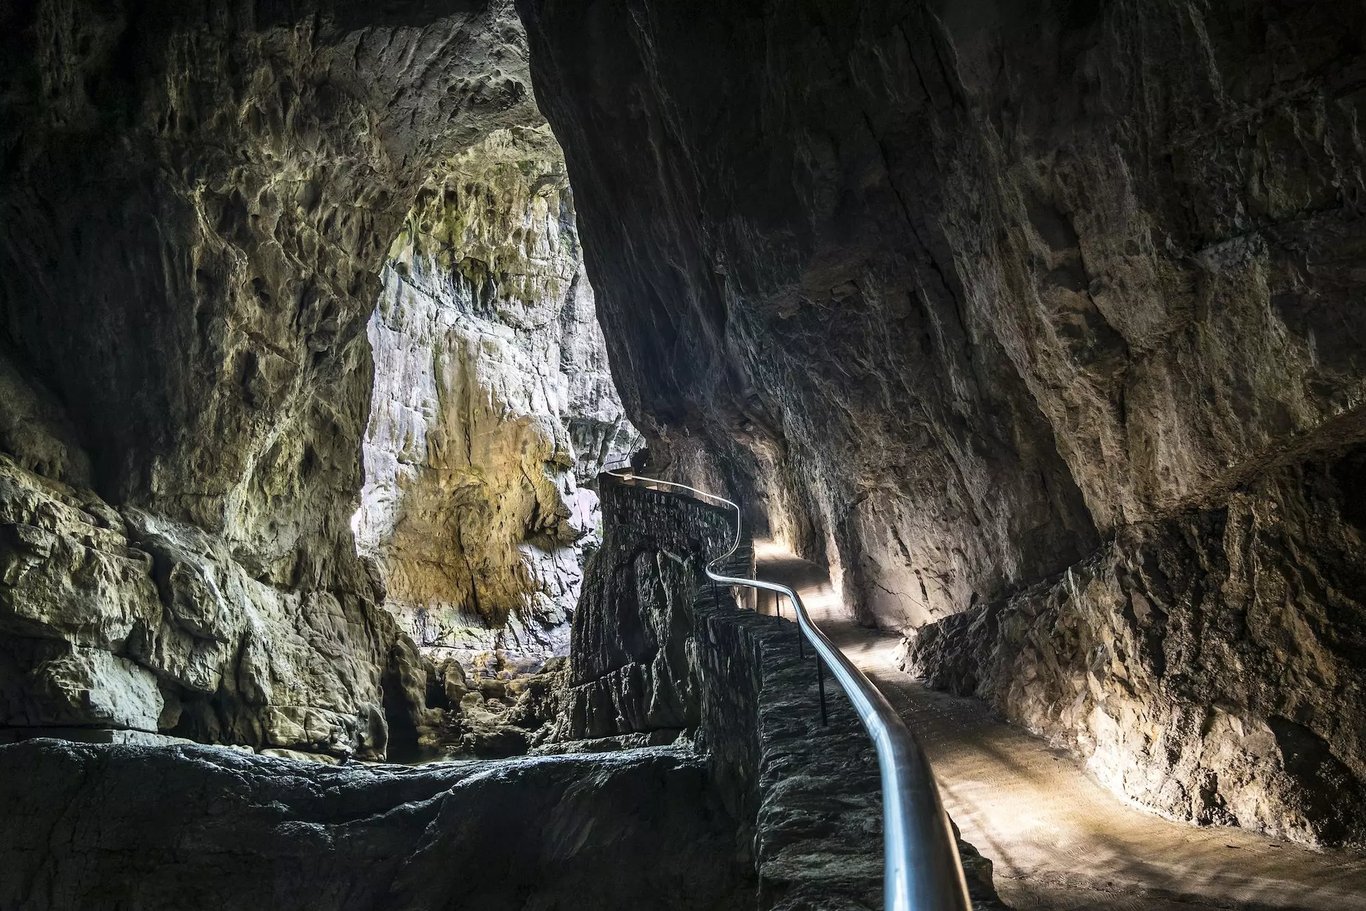 Skocjan Cave, Slovenia - Opening hours, tour timetables, fees, etc.